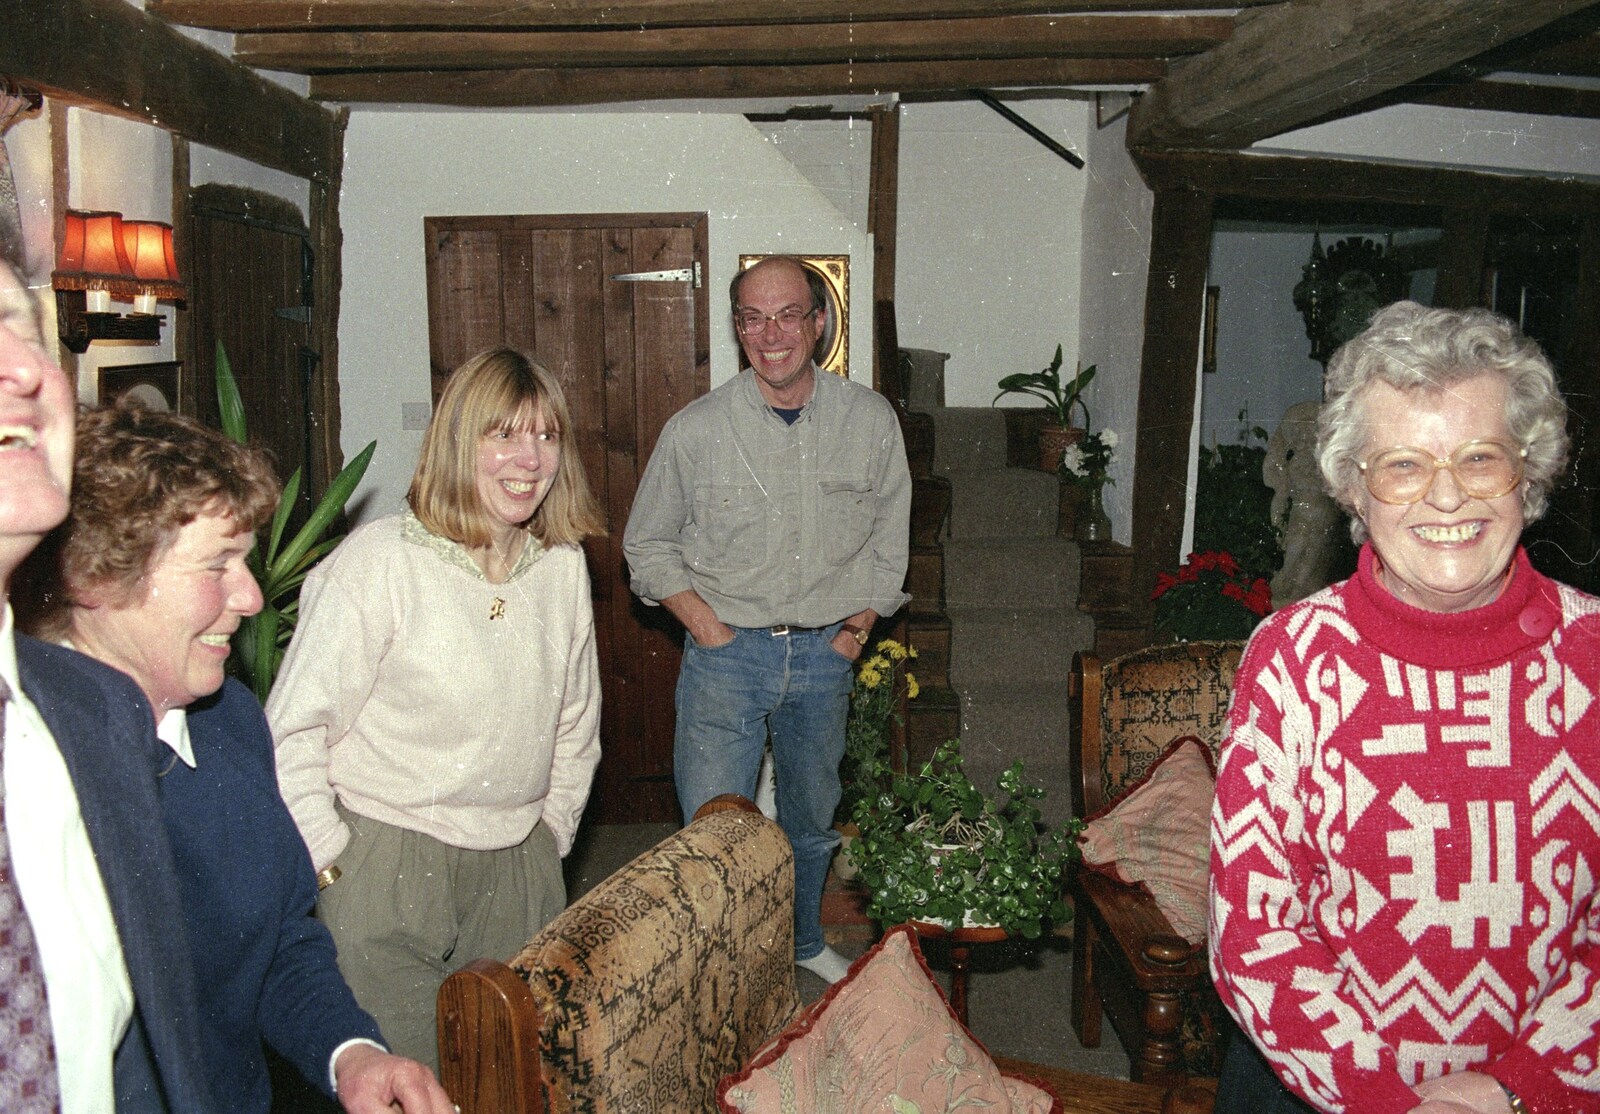 Geoff, Brenda, Janet and John from Printec's Christmas Dinner, Harleston, Norfolk - 22nd December 1990